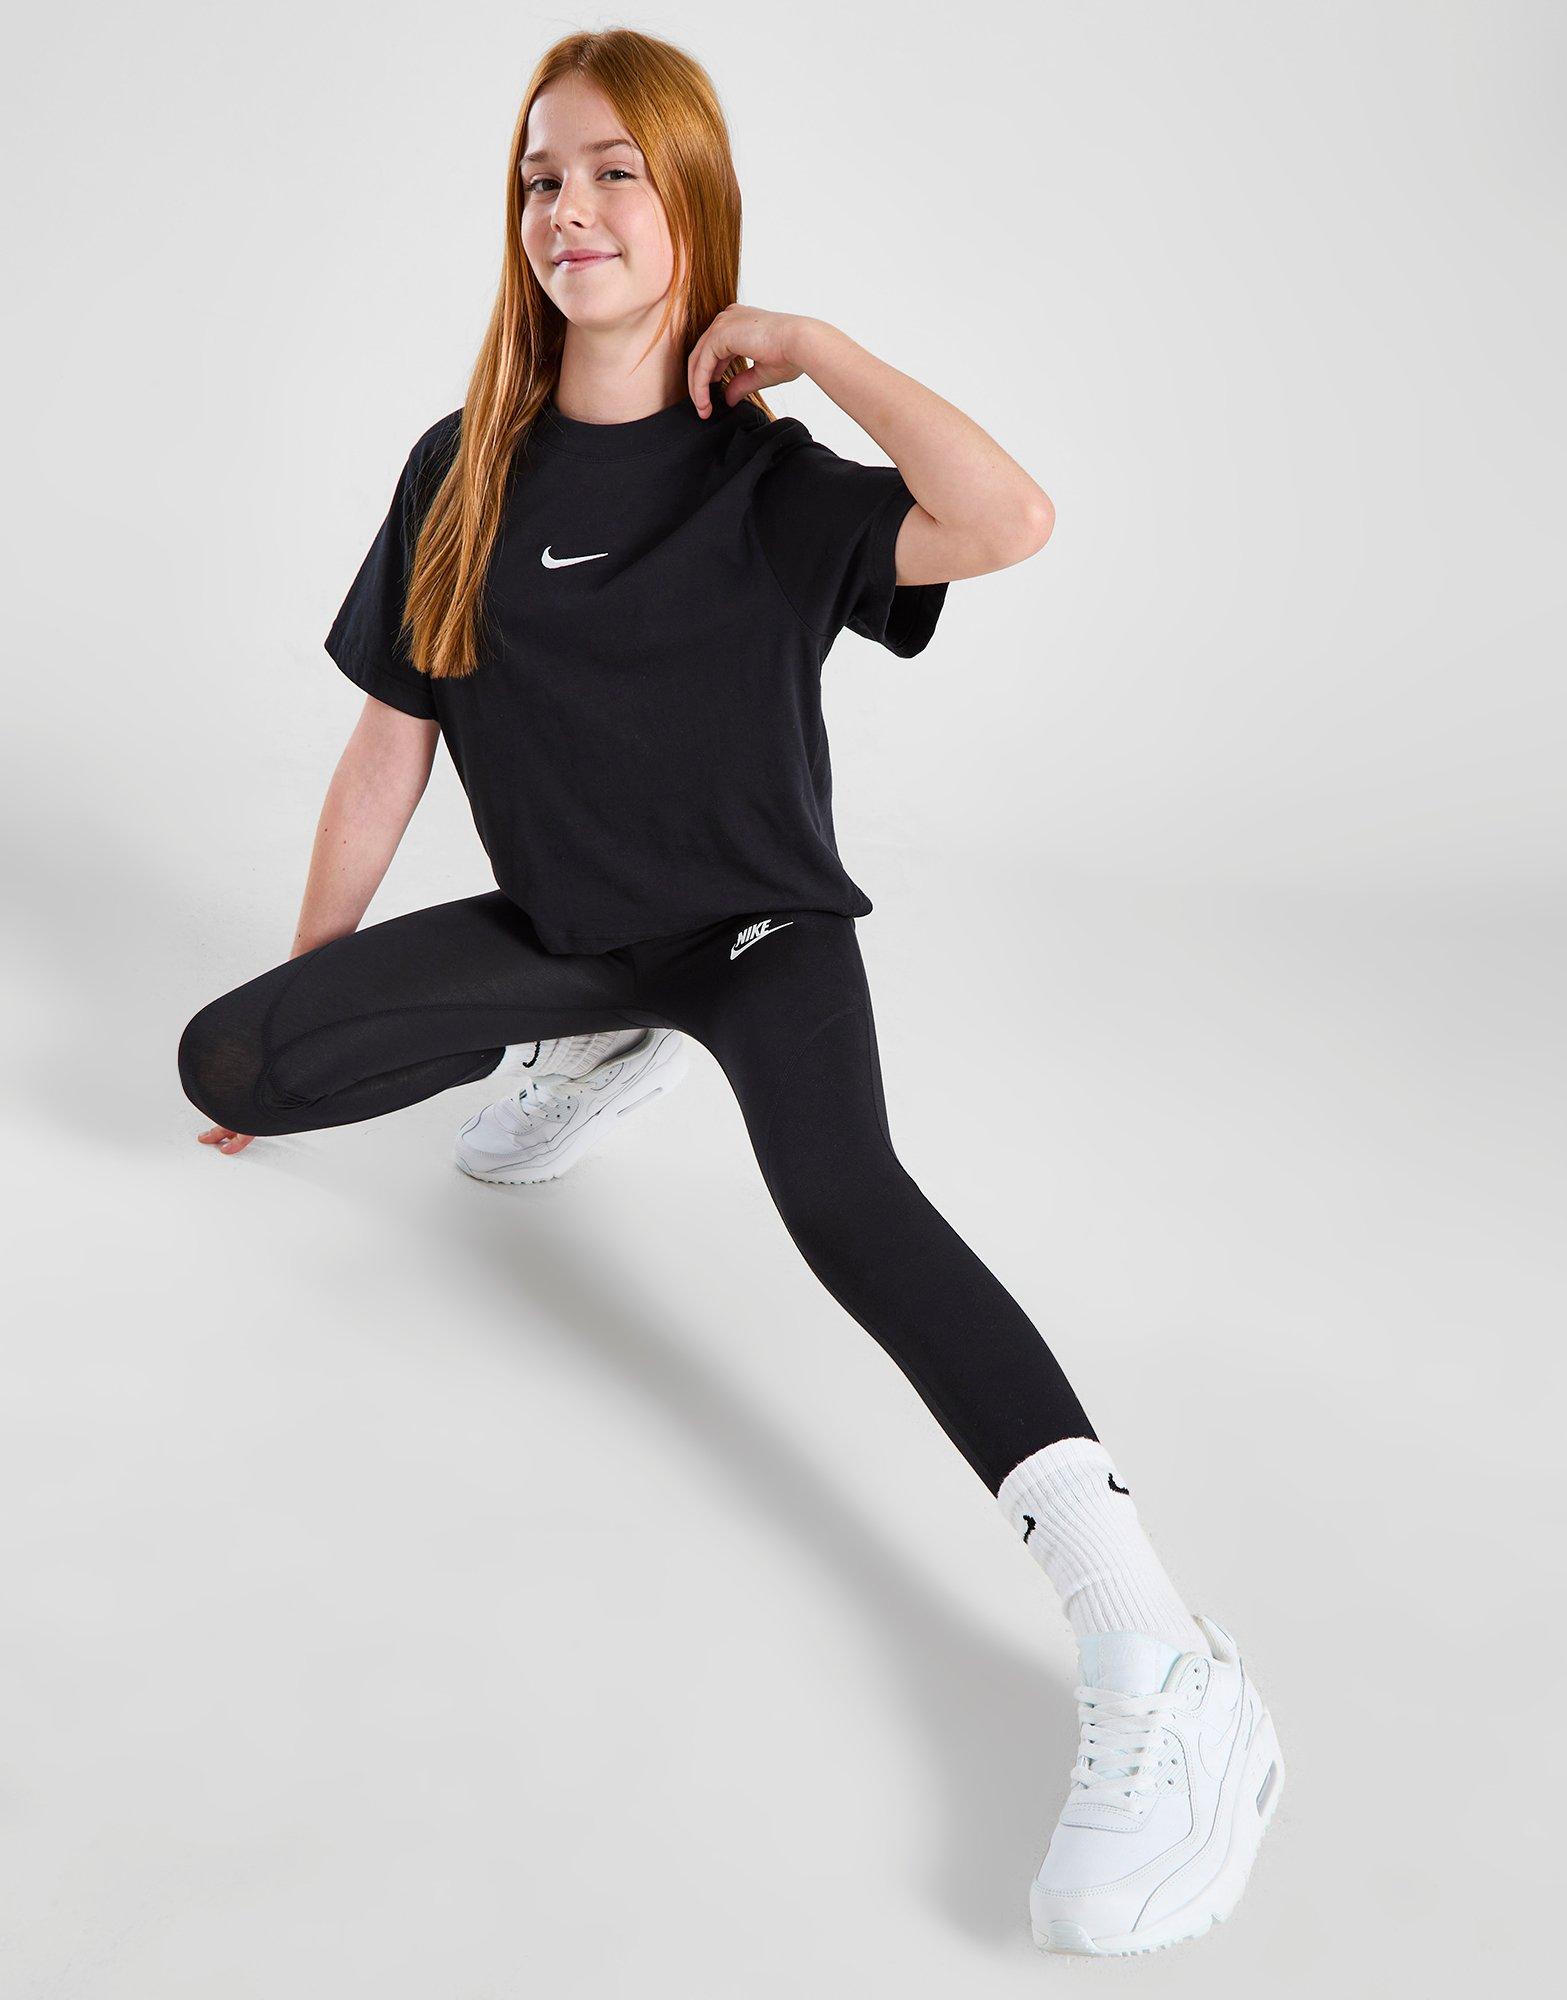 Kids - Nike Leggings - JD Sports Ireland